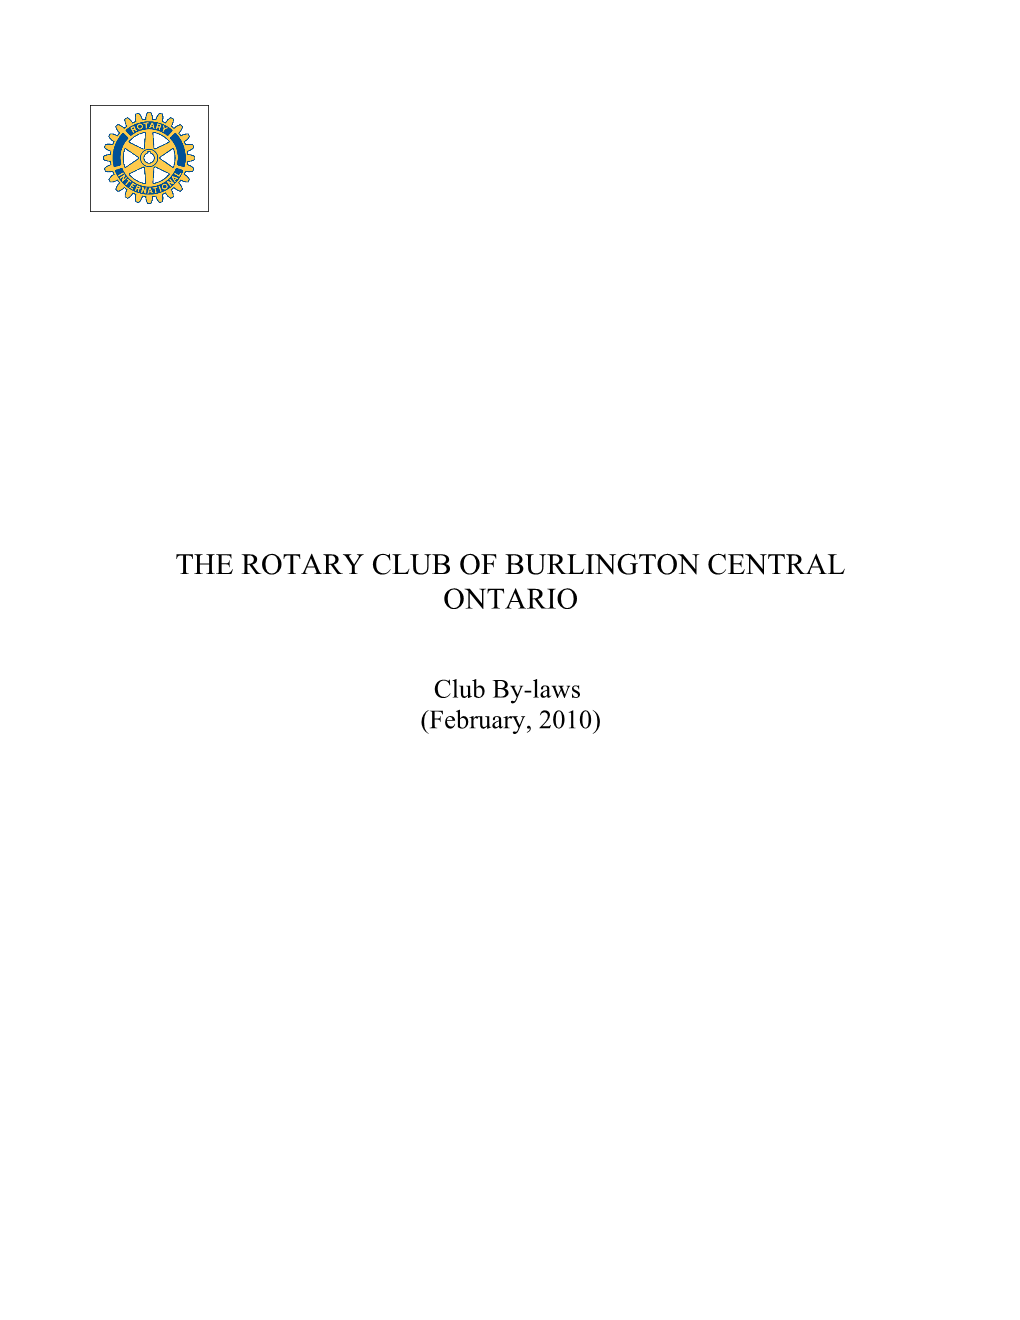 The Rotary Club of Burlington Central Ontario